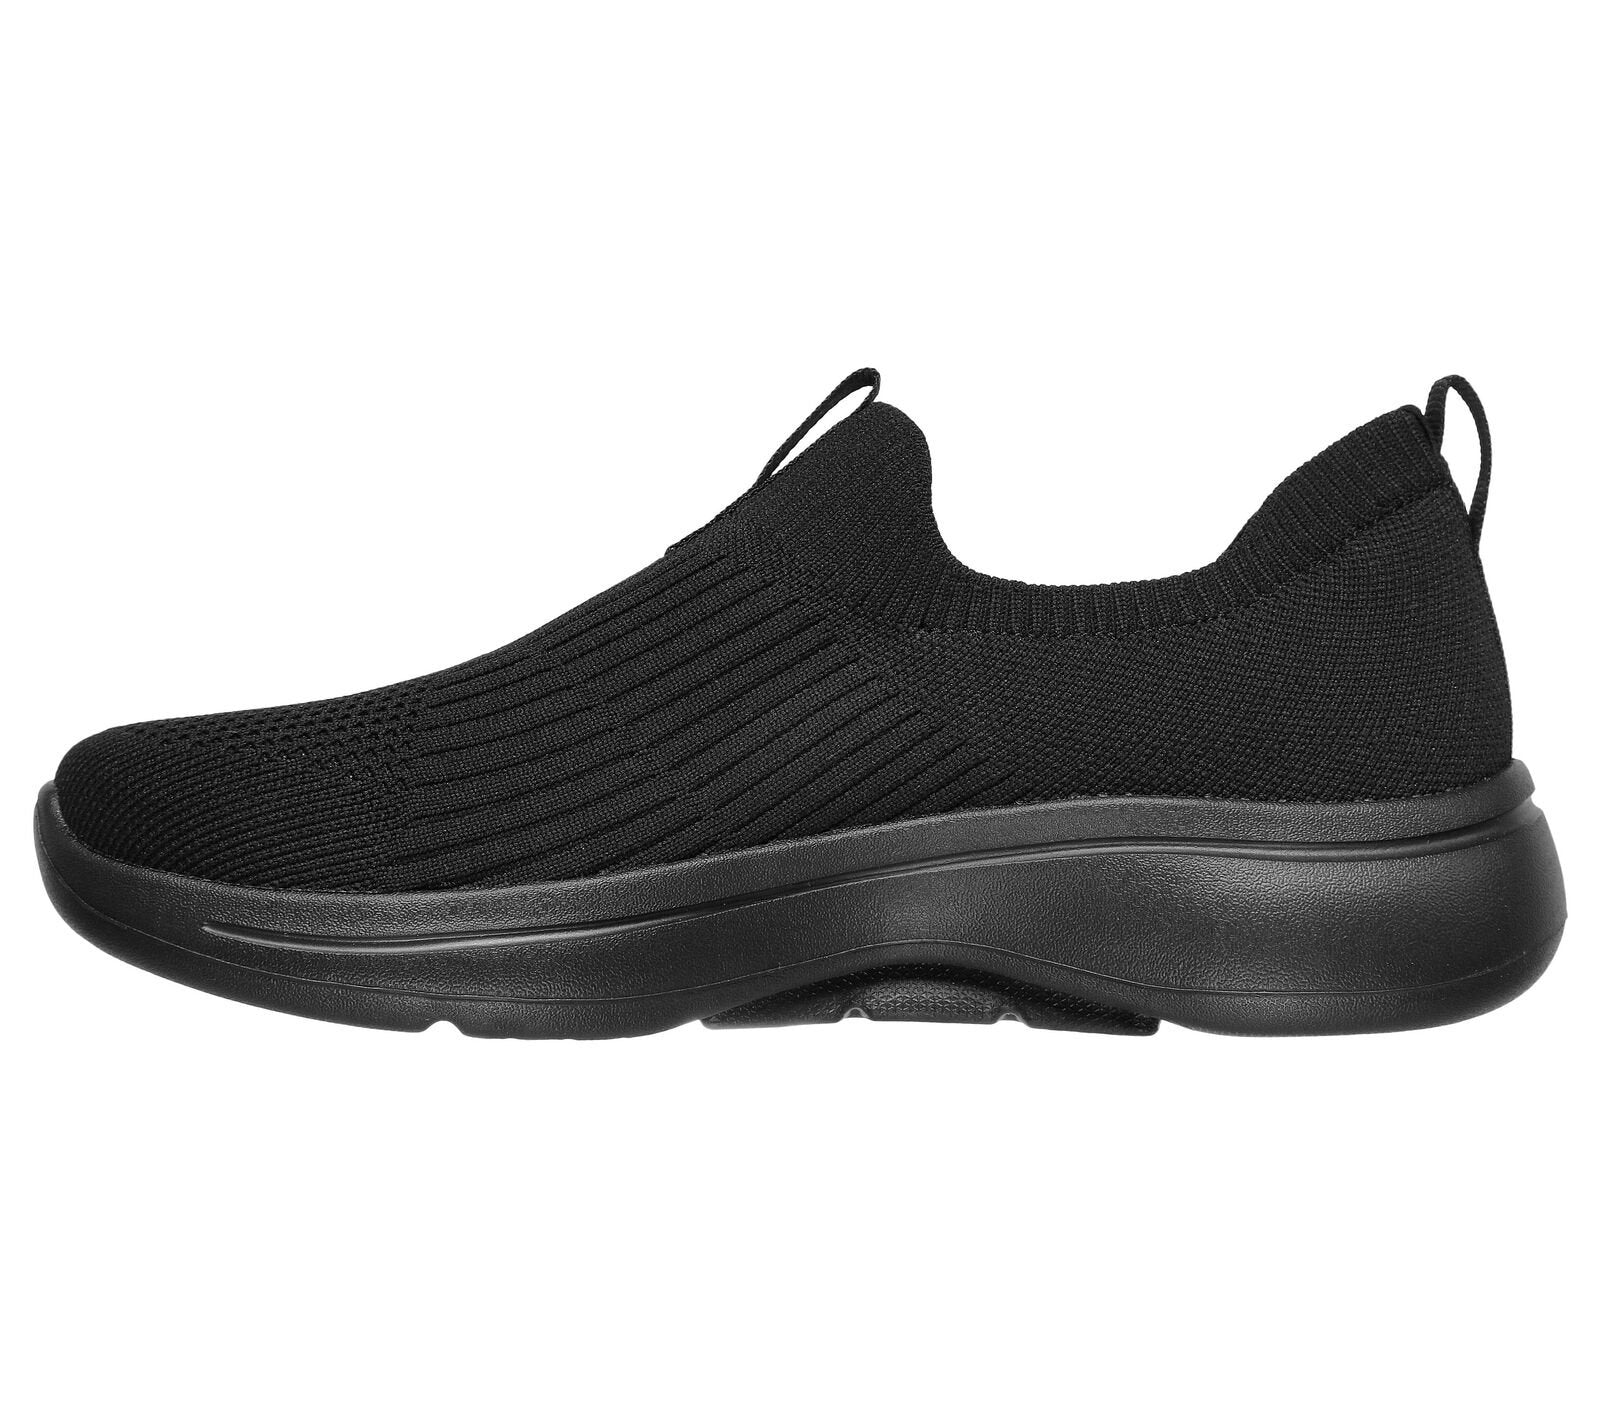 Skechers GOwalk Arch Fit - Iconic Slip-On Sneakers Black